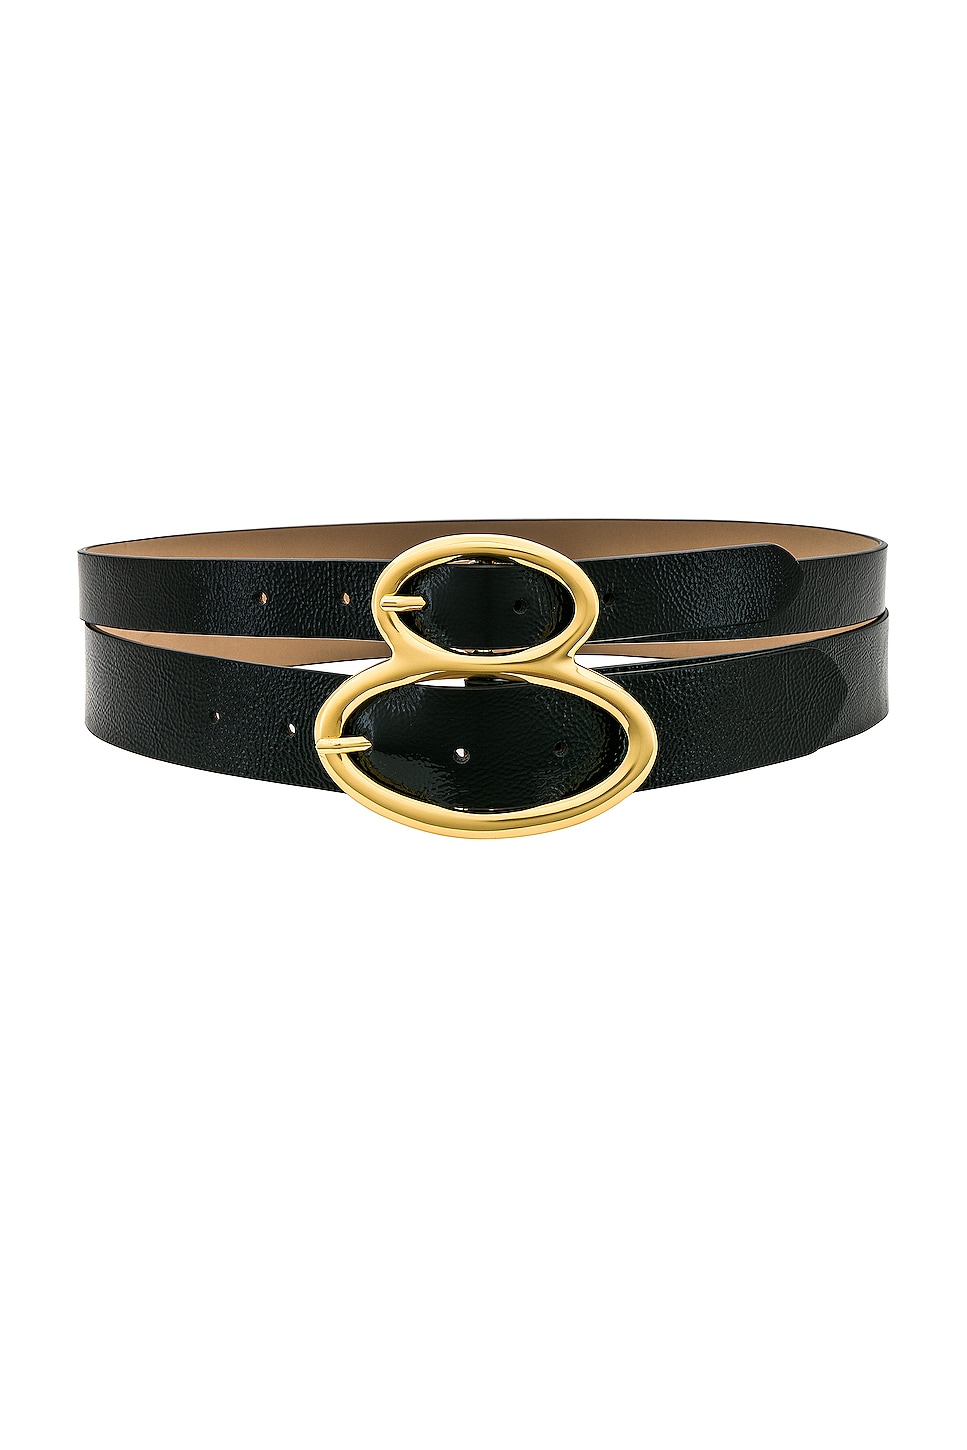 B-Low the Belt Ophelia Gloss Belt in Black & Gold | REVOLVE